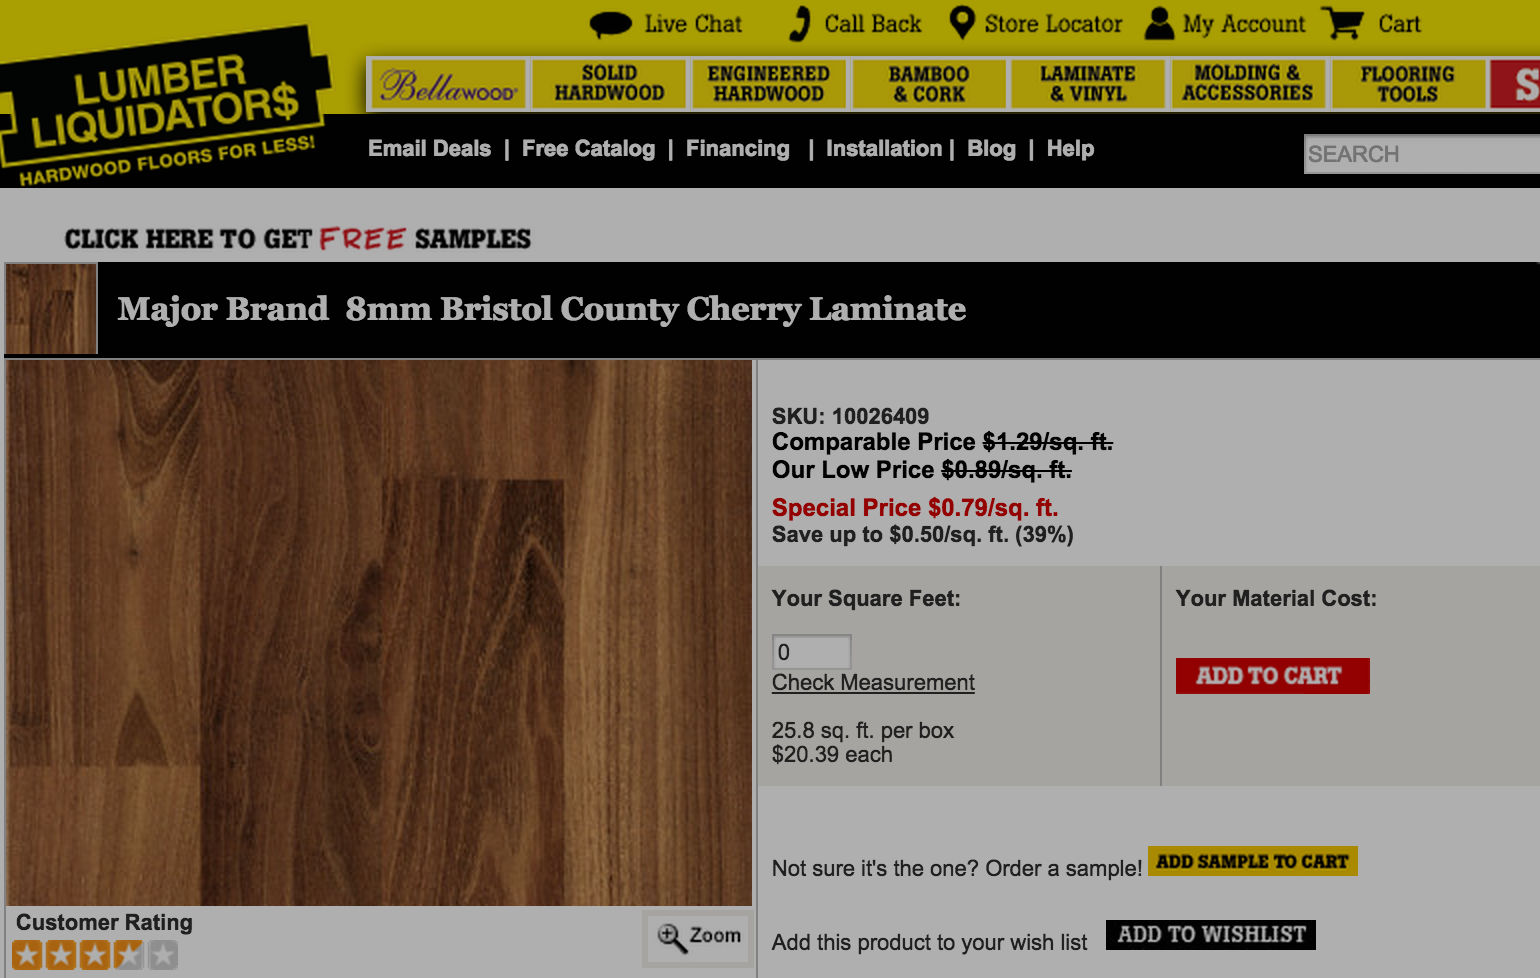 Lumber Liquidators Won’t Resume Sale Of Laminate Wood Flooring From China